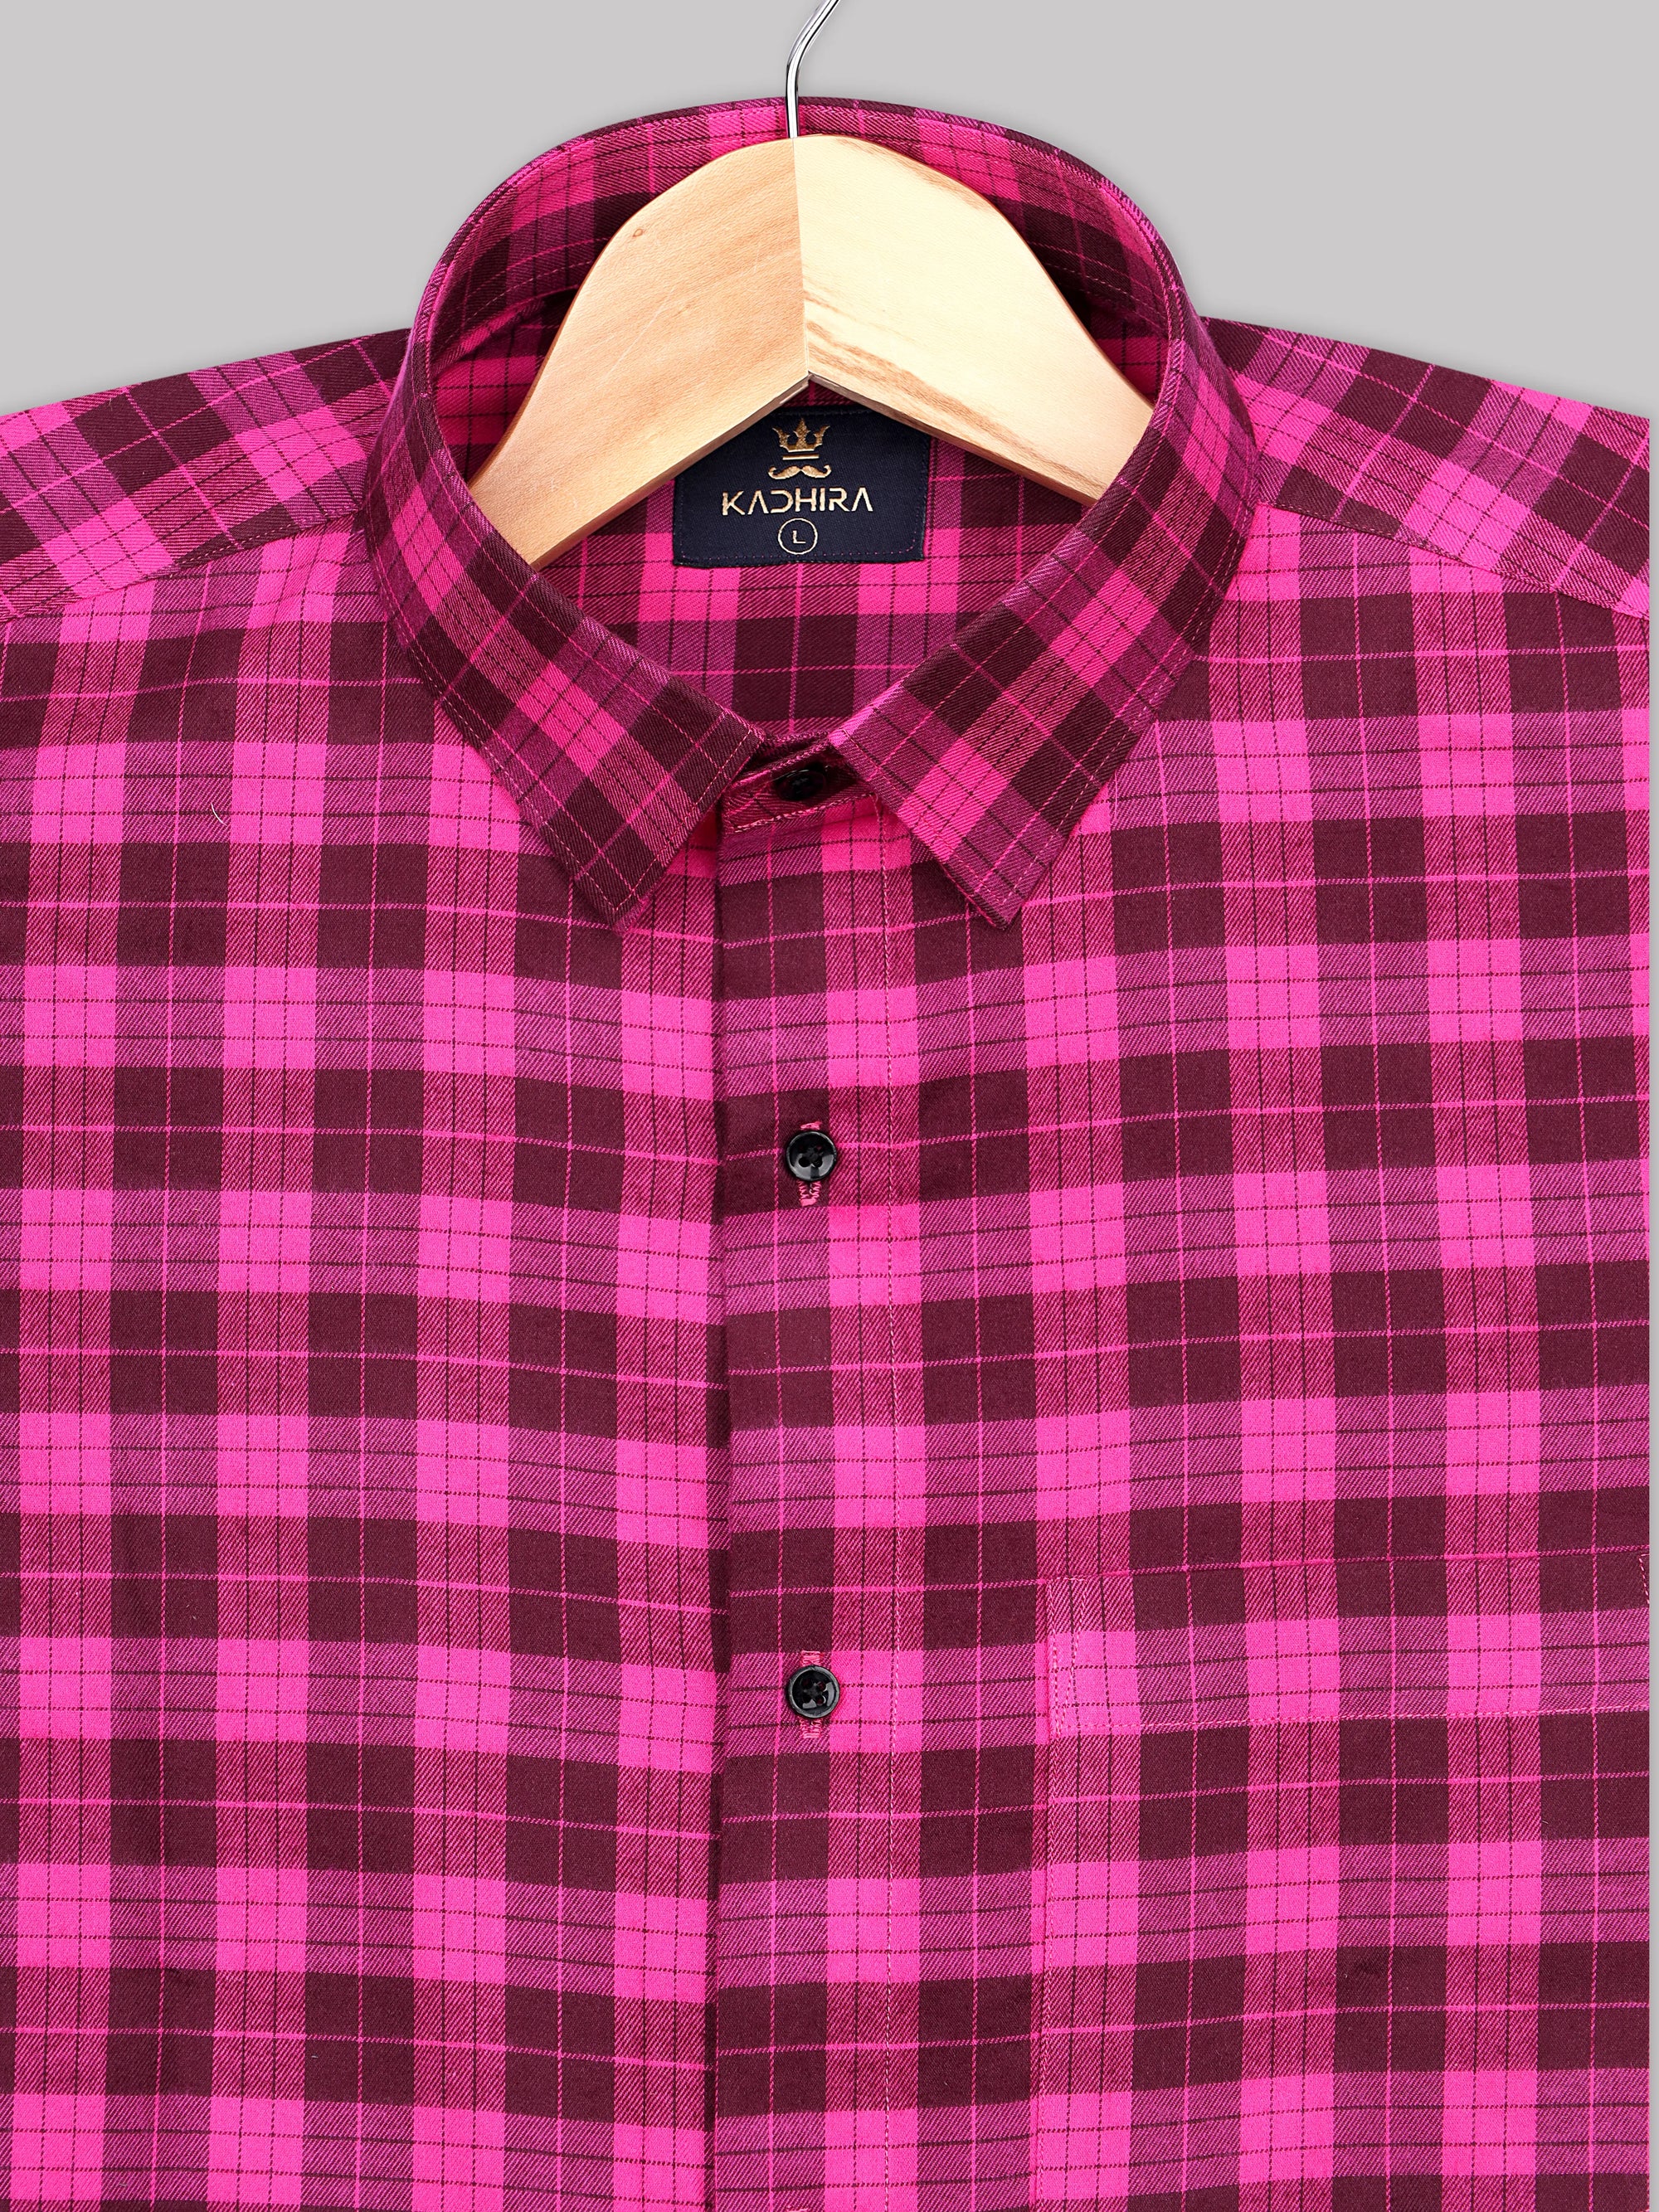 Blush Pink With Brown Tartans Checkered  Premium Cotton Shirt